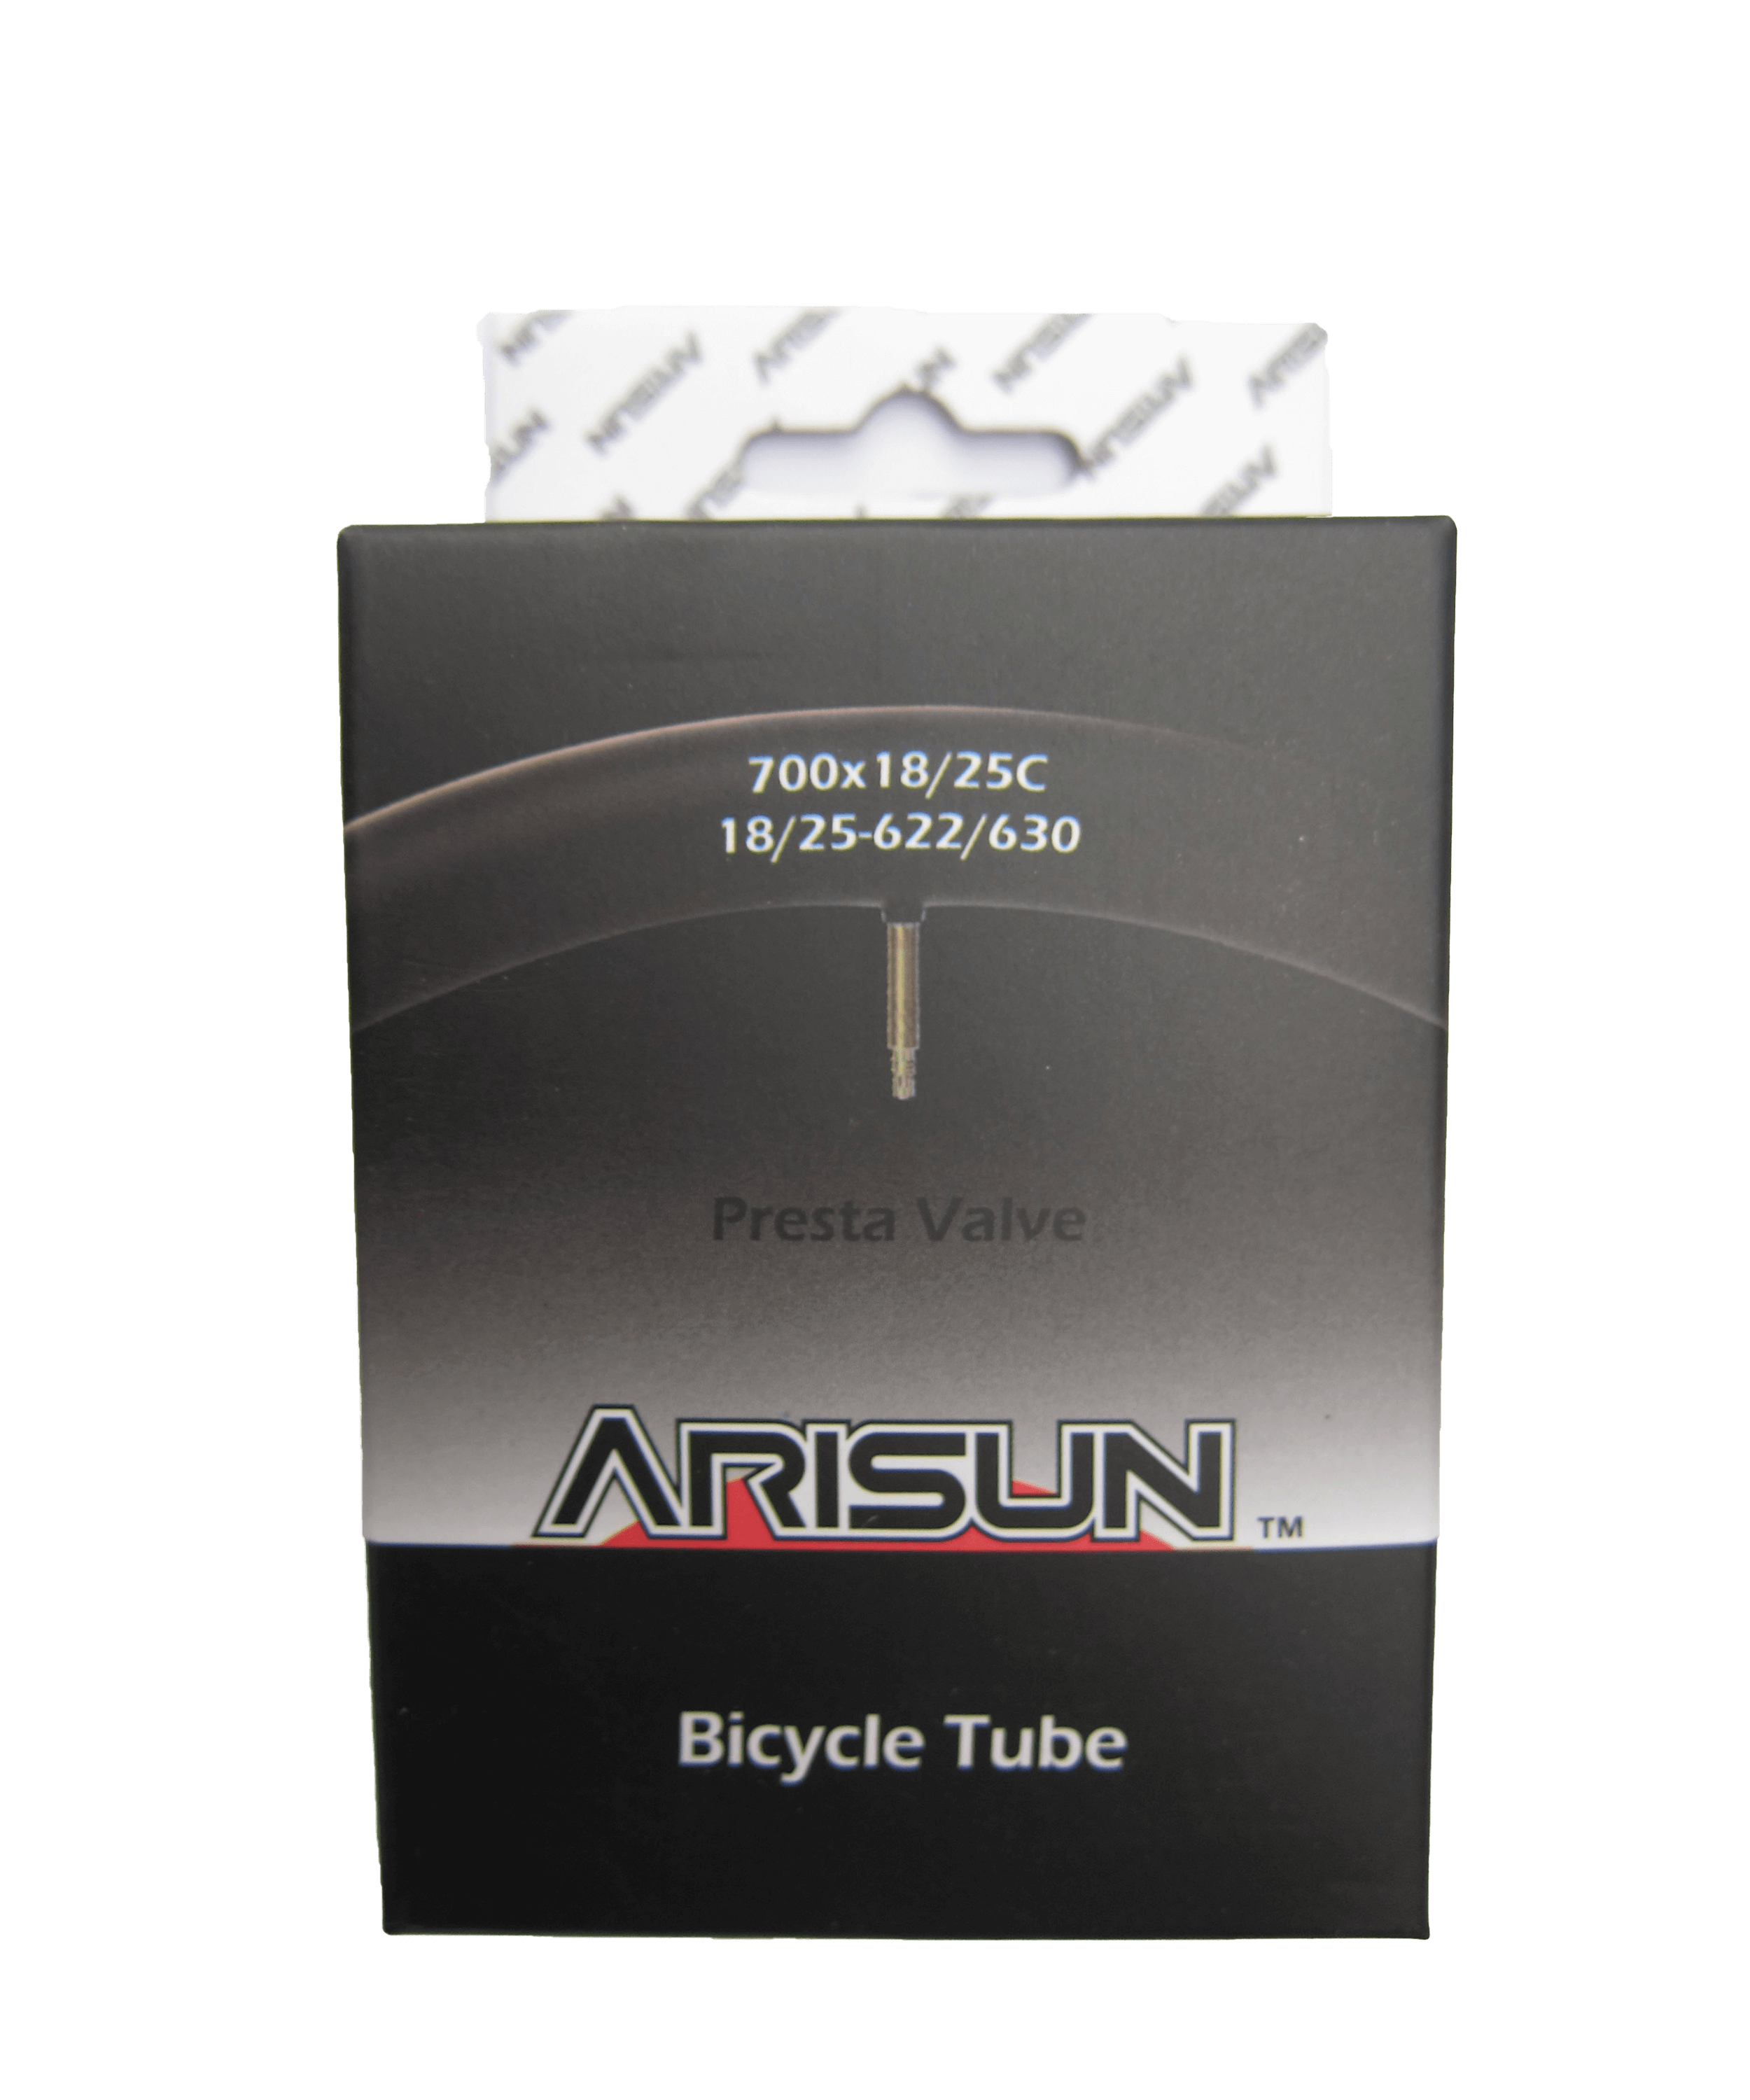 ARISUN 700x18-25C Cycling Inner Tube - Presta Valve